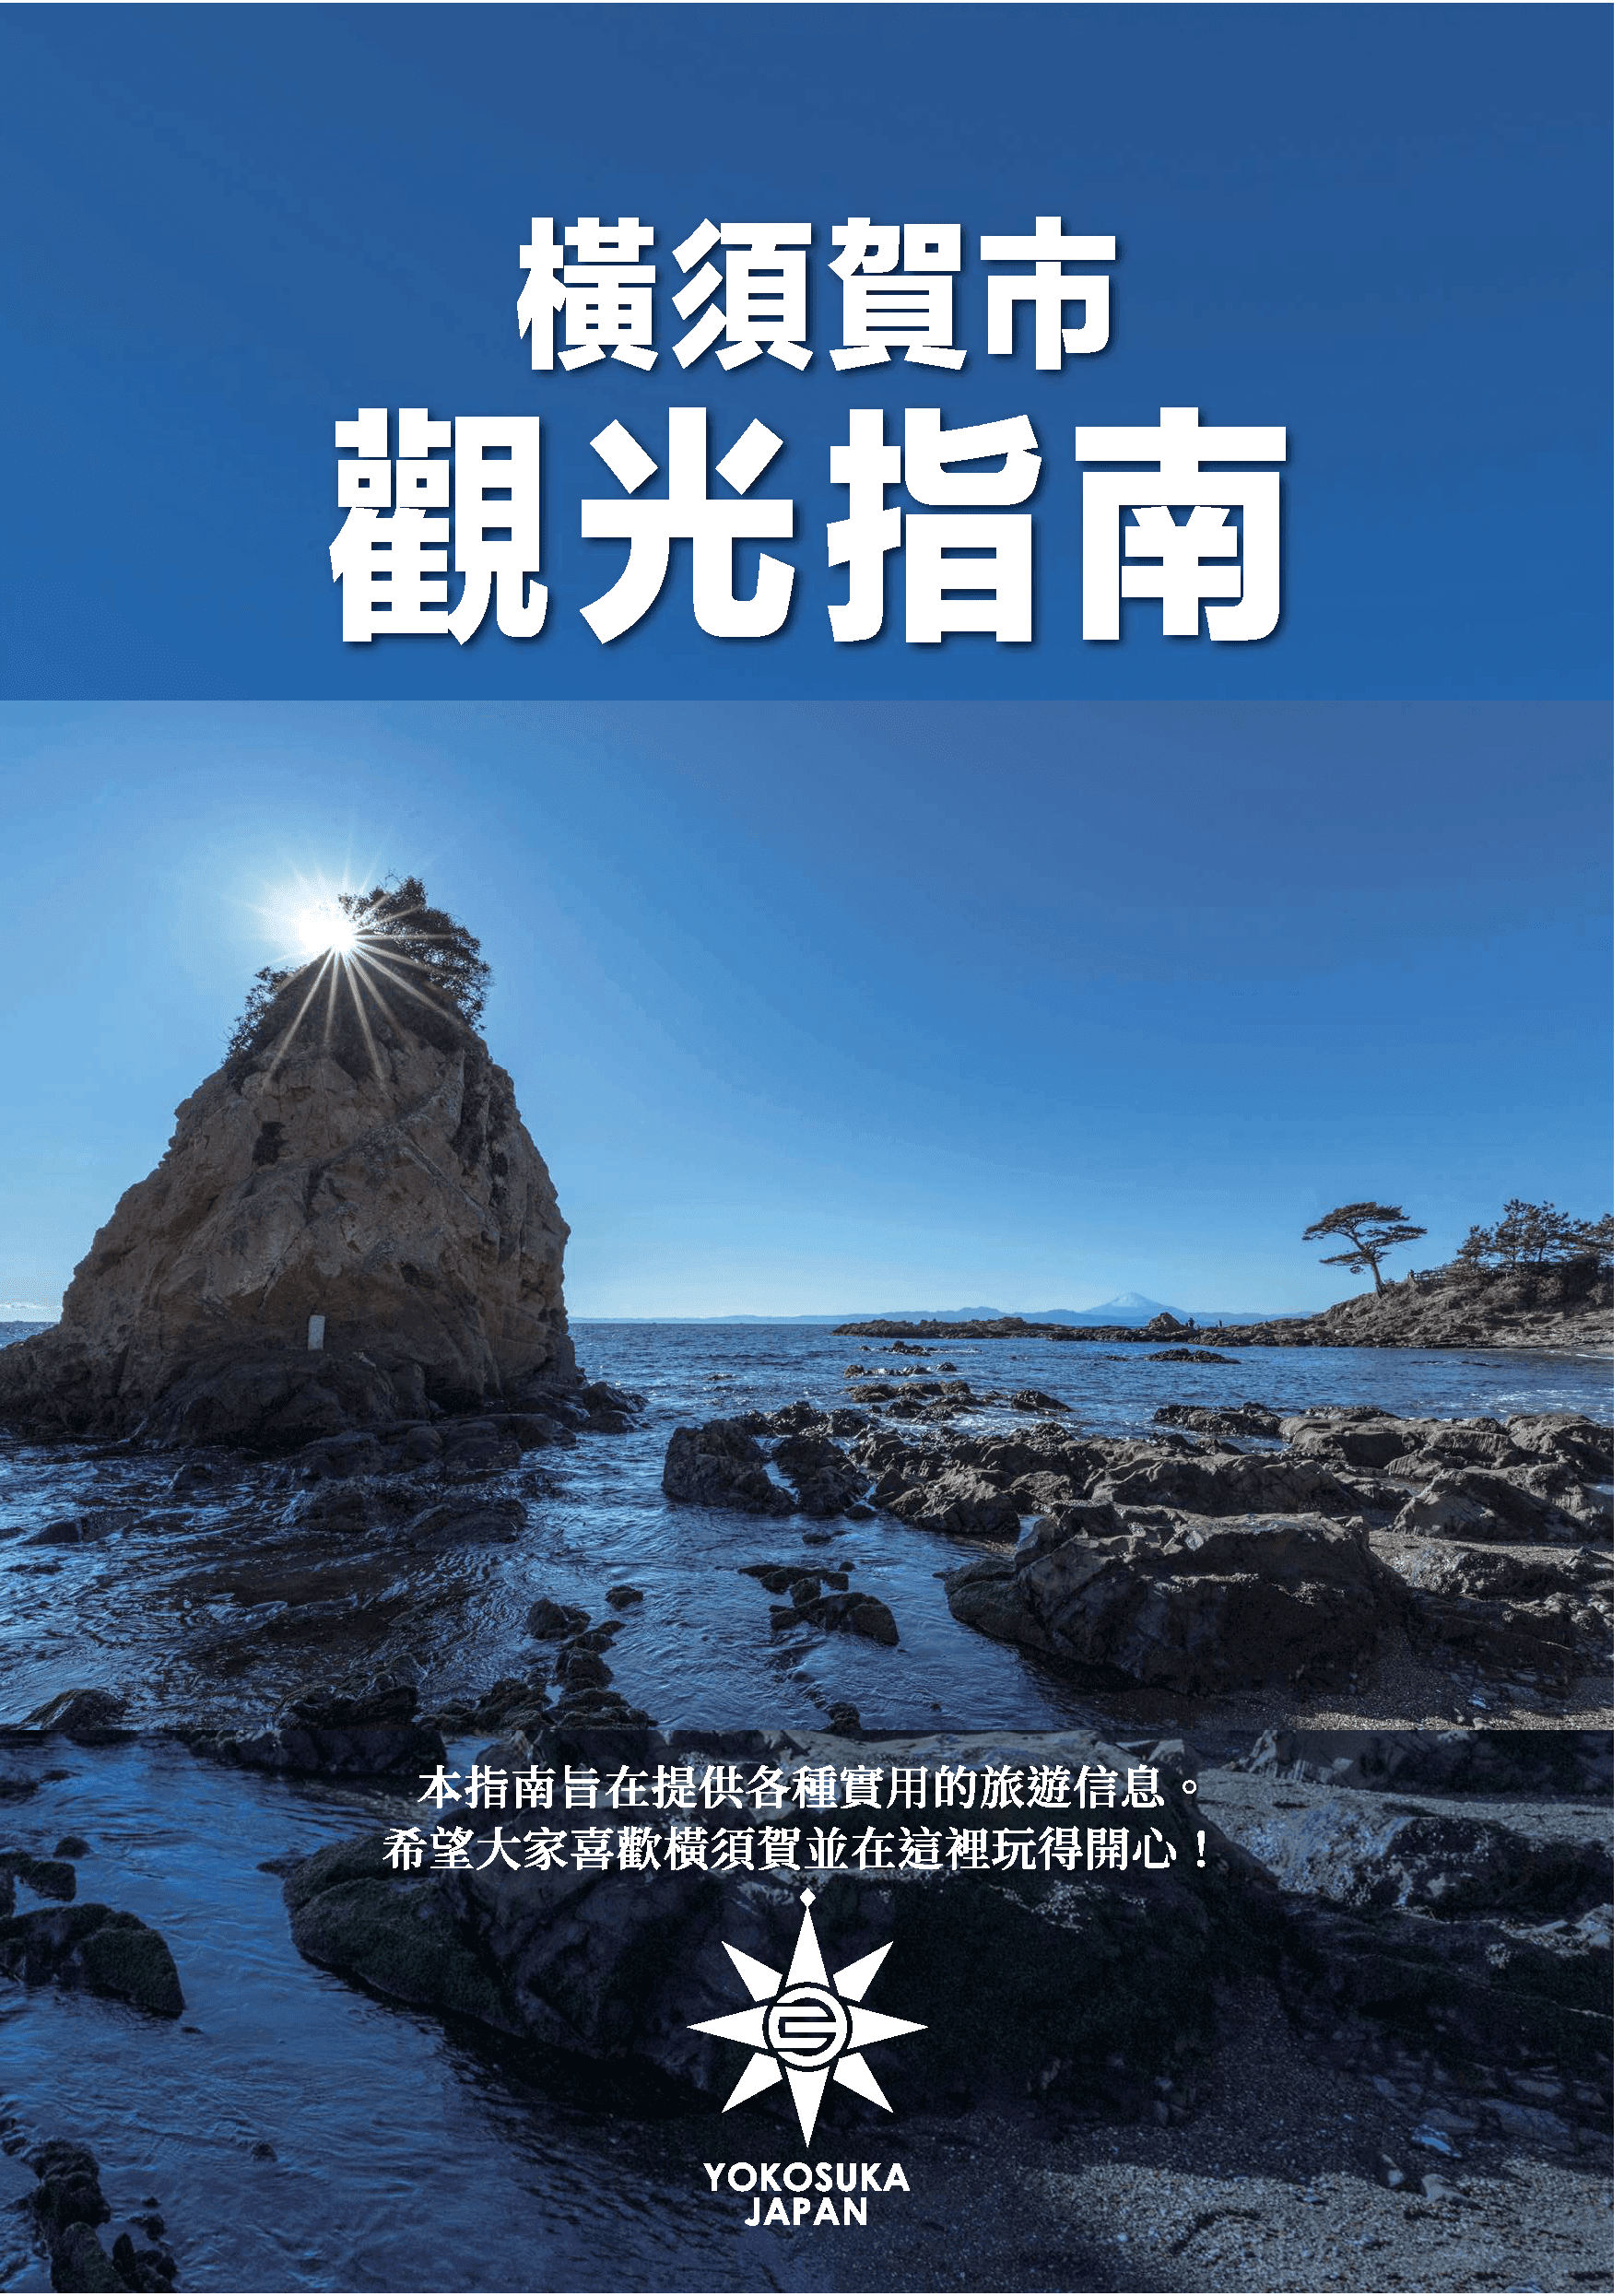 Tourism Yokosuka Travel Guide -YOKOSUKA GUIDE MAP-中国語(繁体字)版